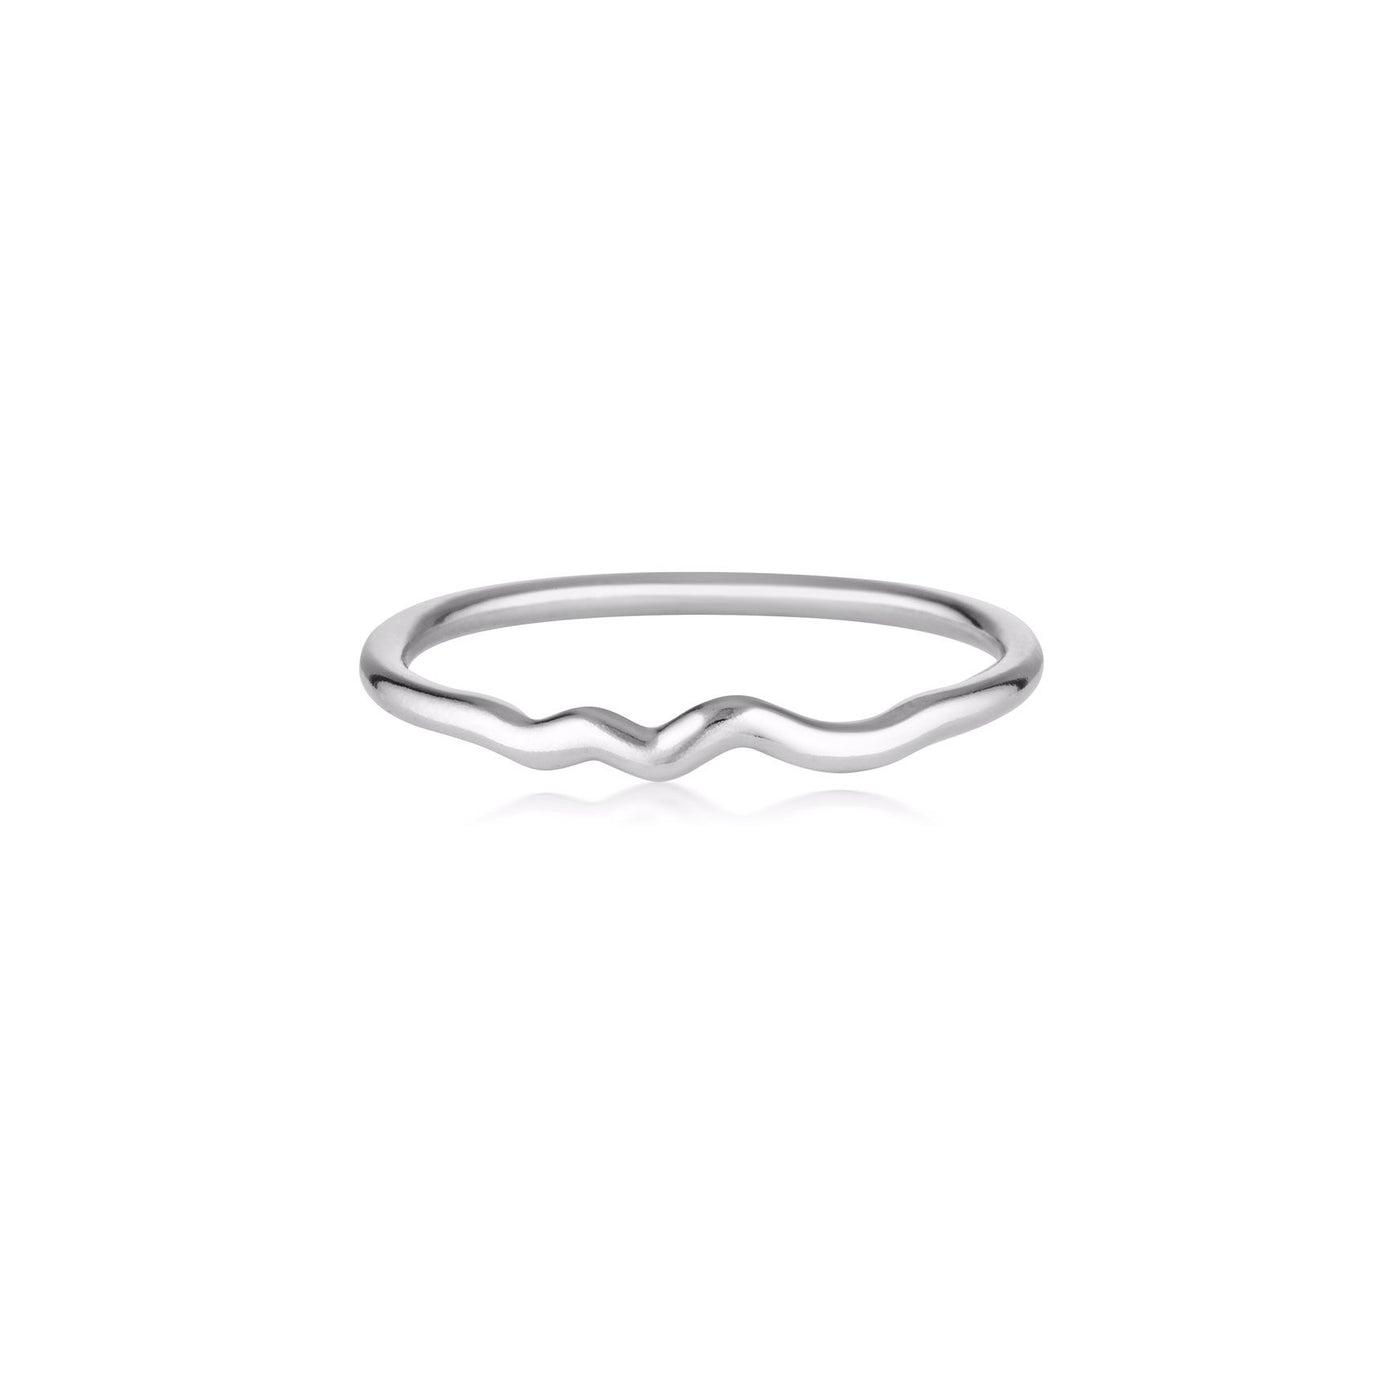 Linda Tahija Wave Ring, Silver